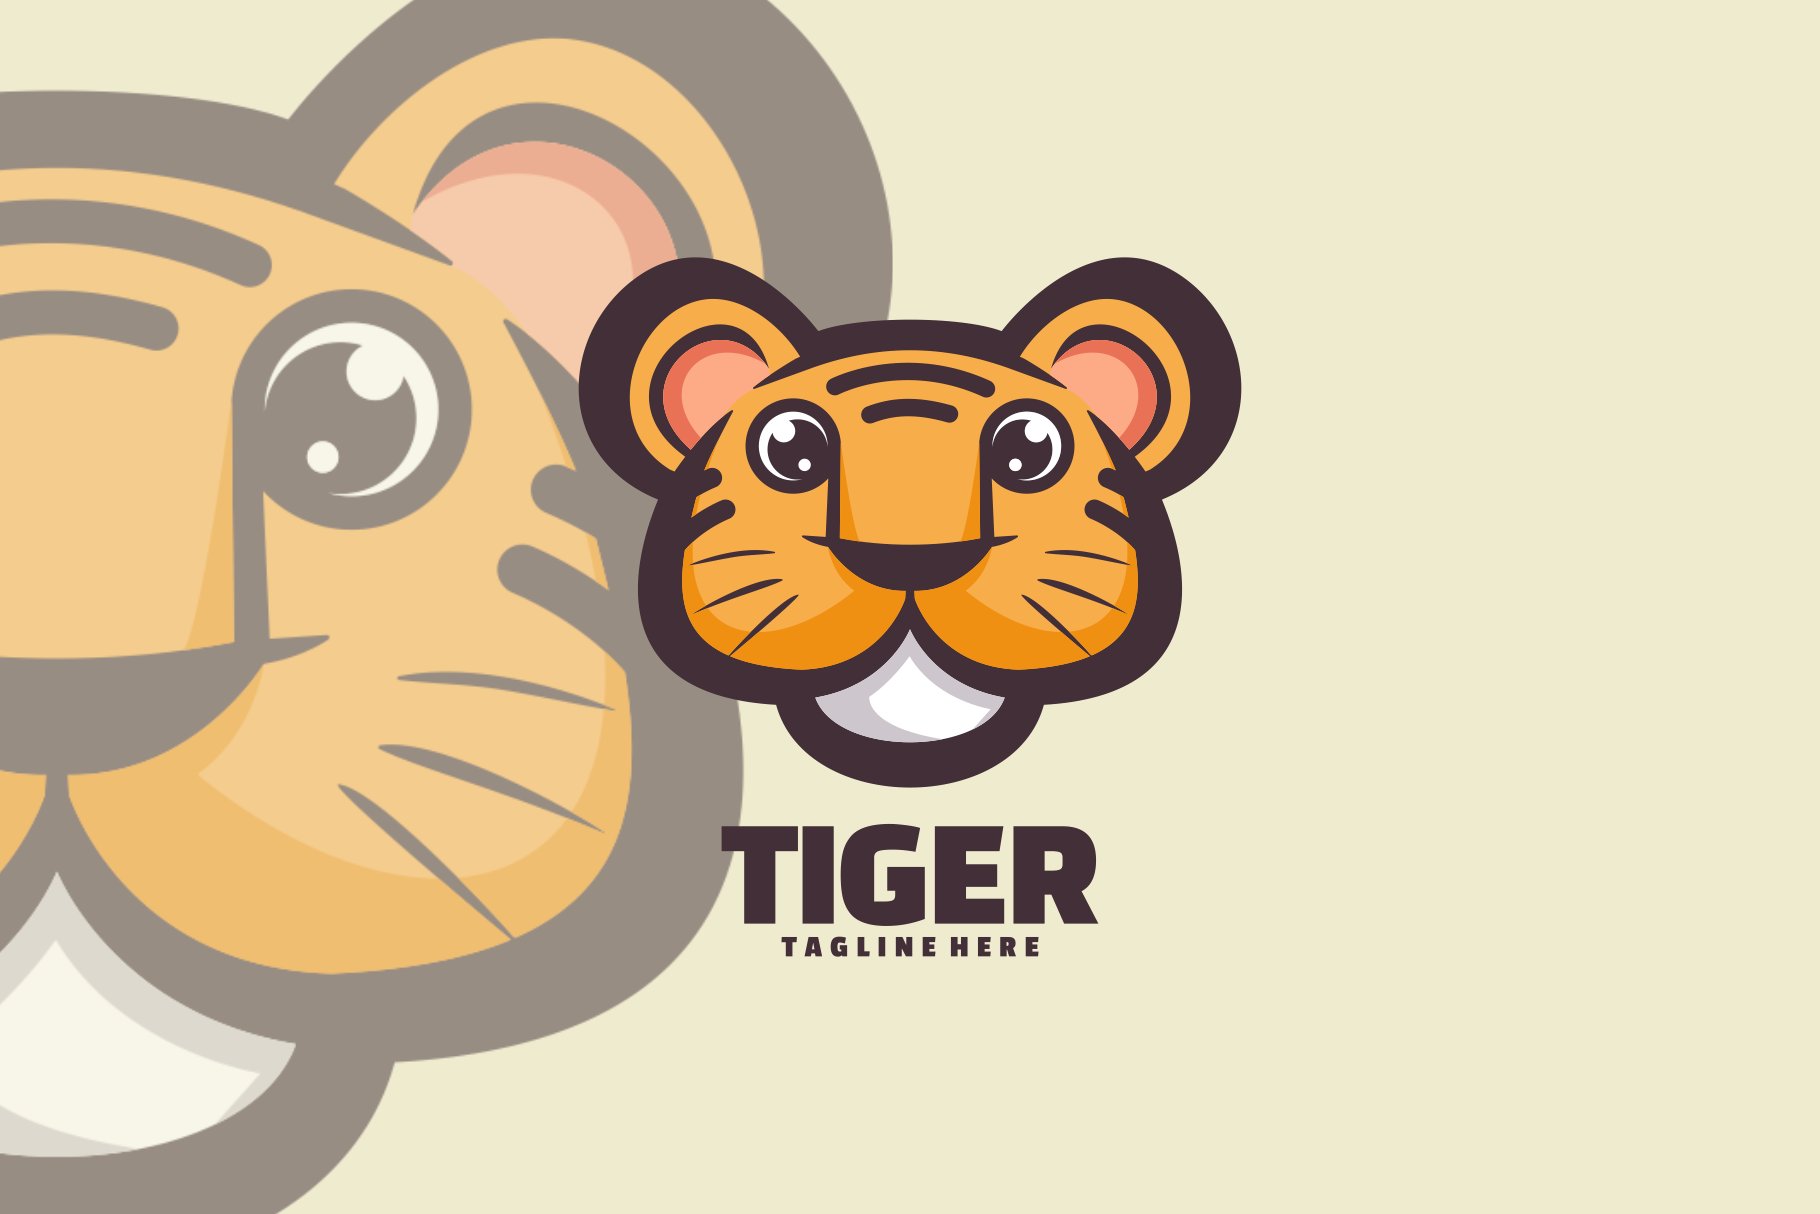 Tiger Logo Vector cover image.